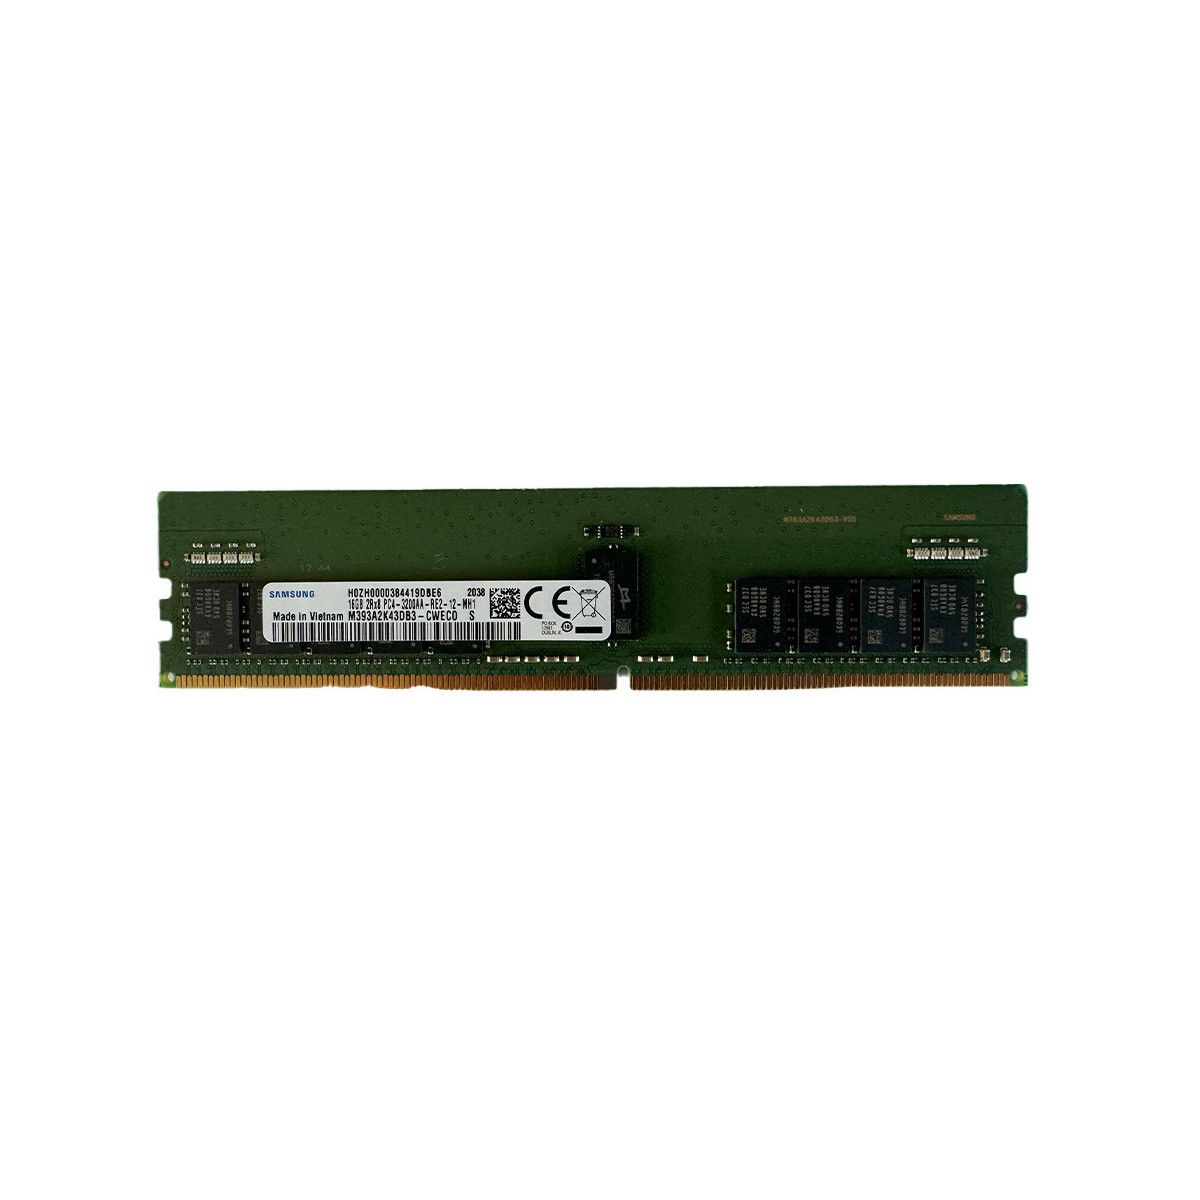 AB214251-MS - Memstar 1x 16GB DDR4-3200 RDIMM PC4-25600R - Mem-Star Compatible OEM Memory 1 - Memstar 